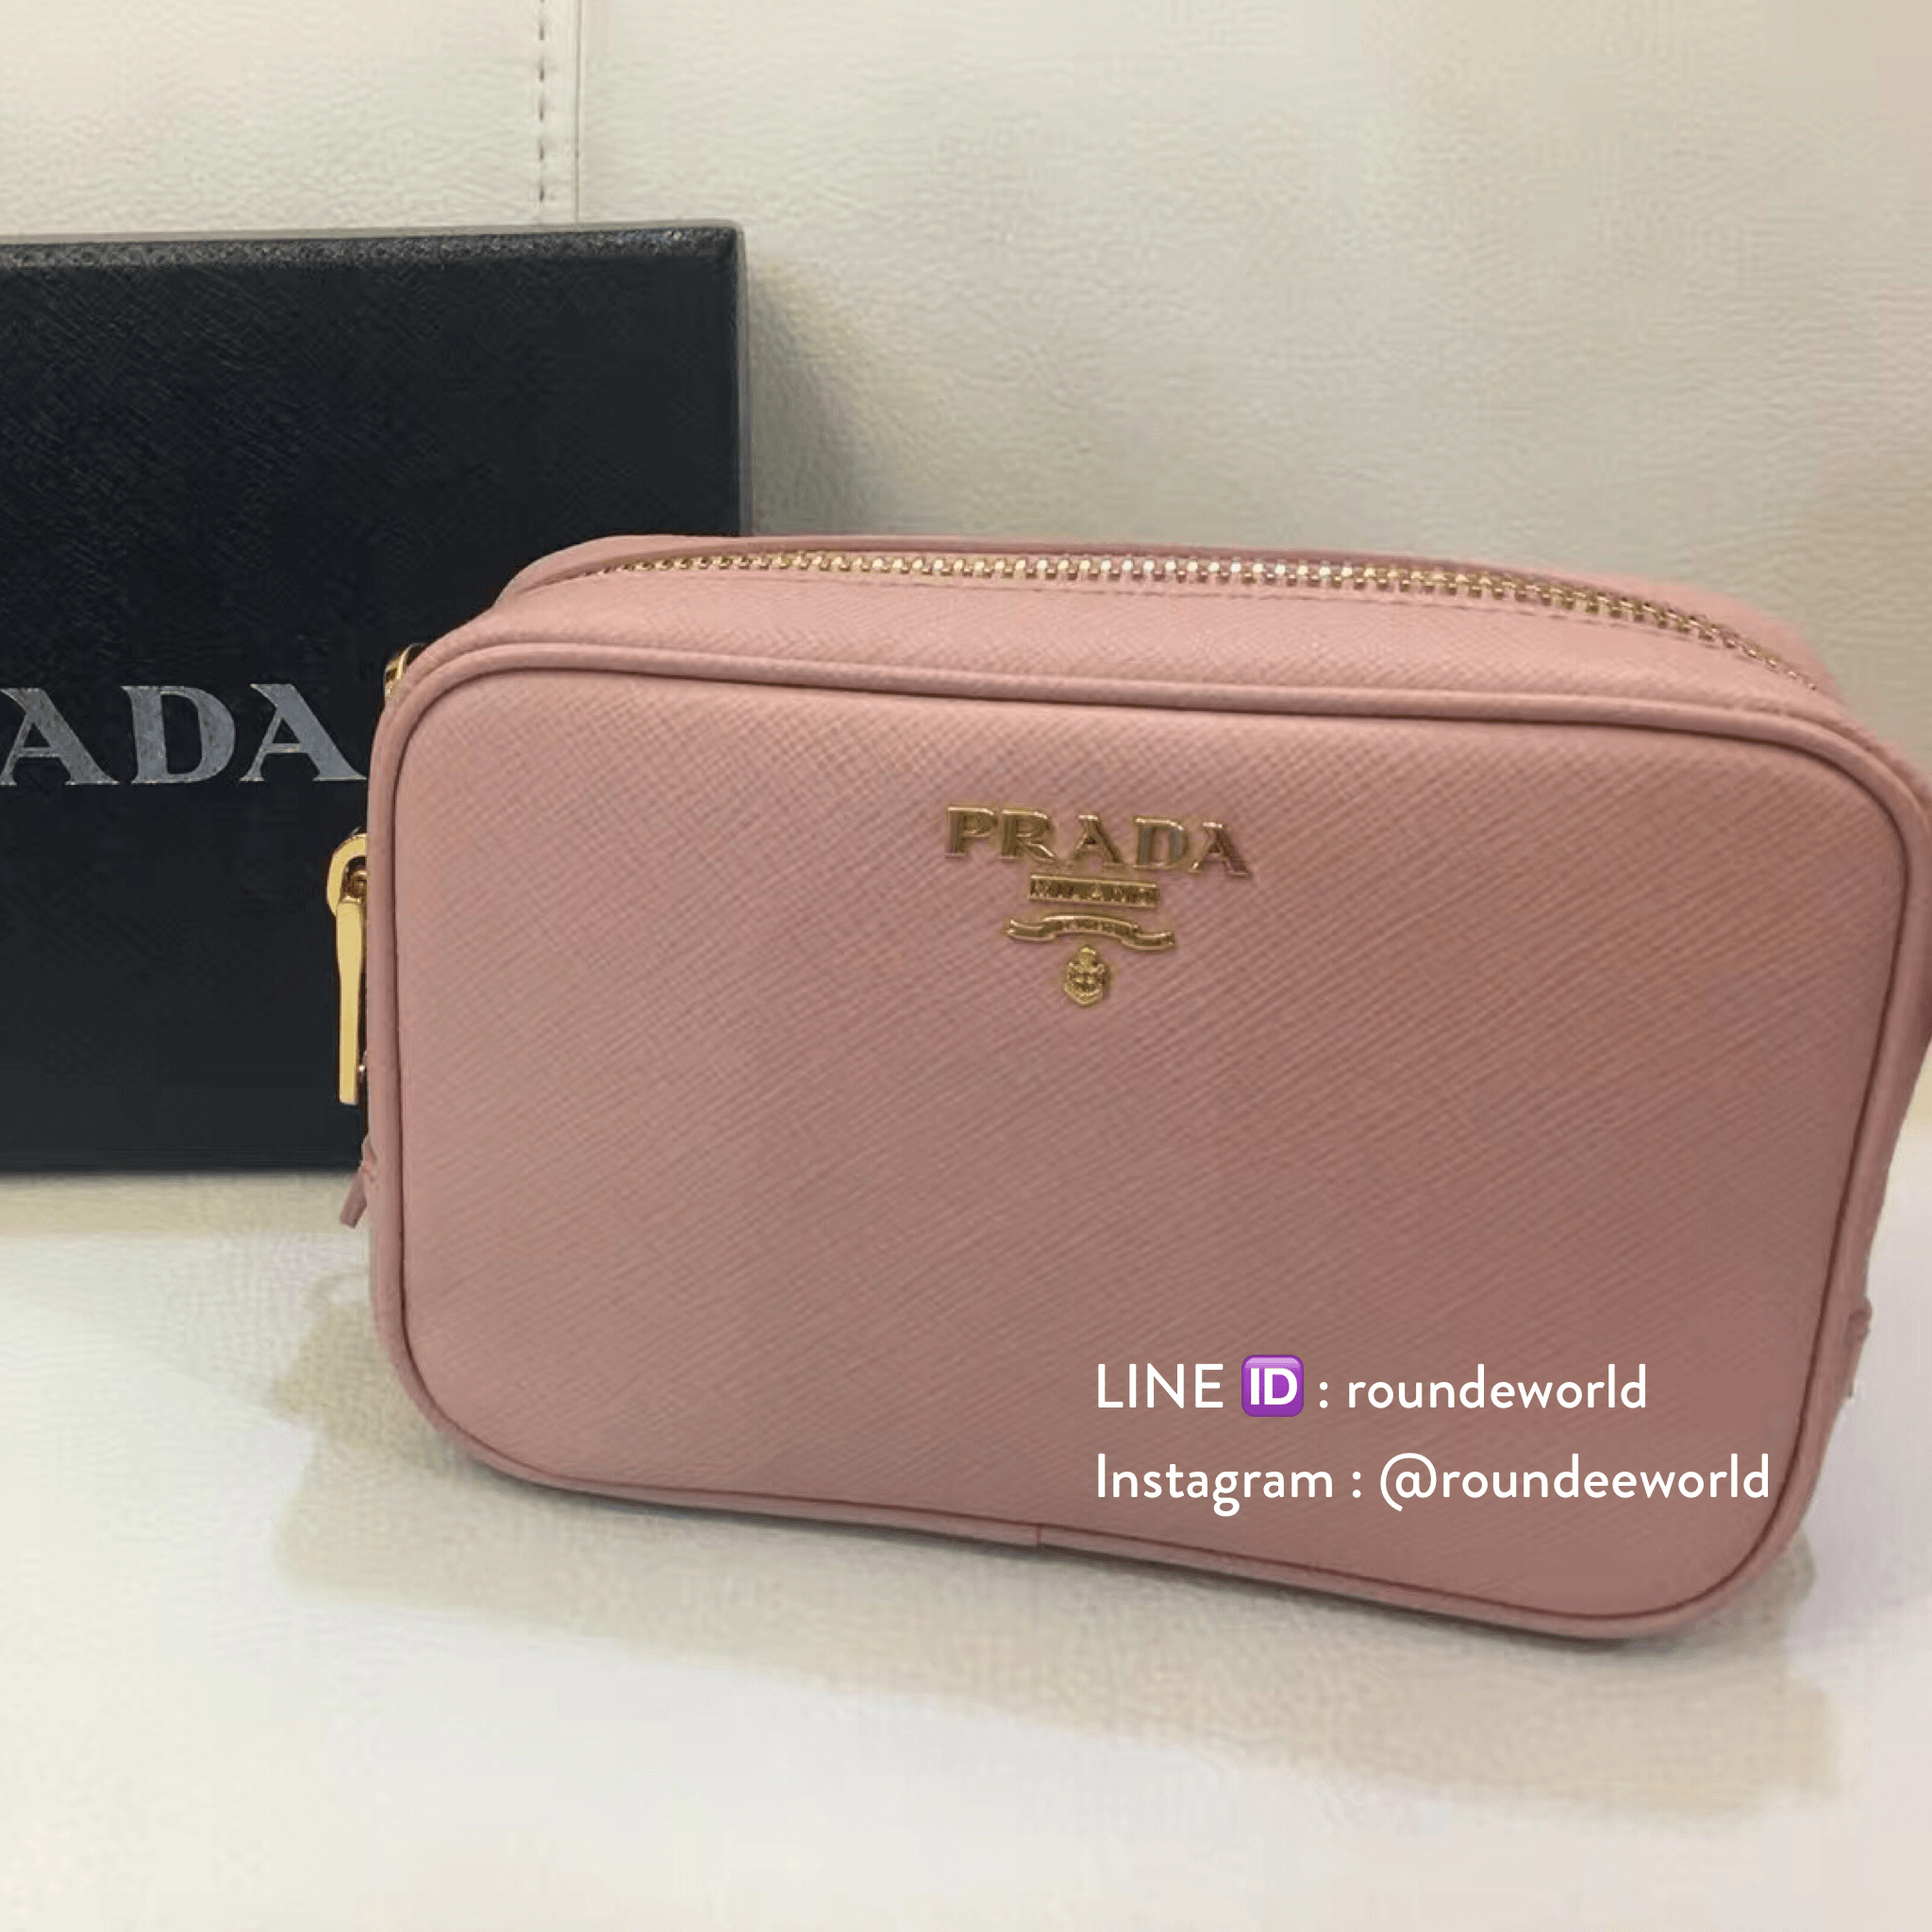 Prada Authentic Handbags Online Malaysia - Style Guru: Fashion, Glitz ...